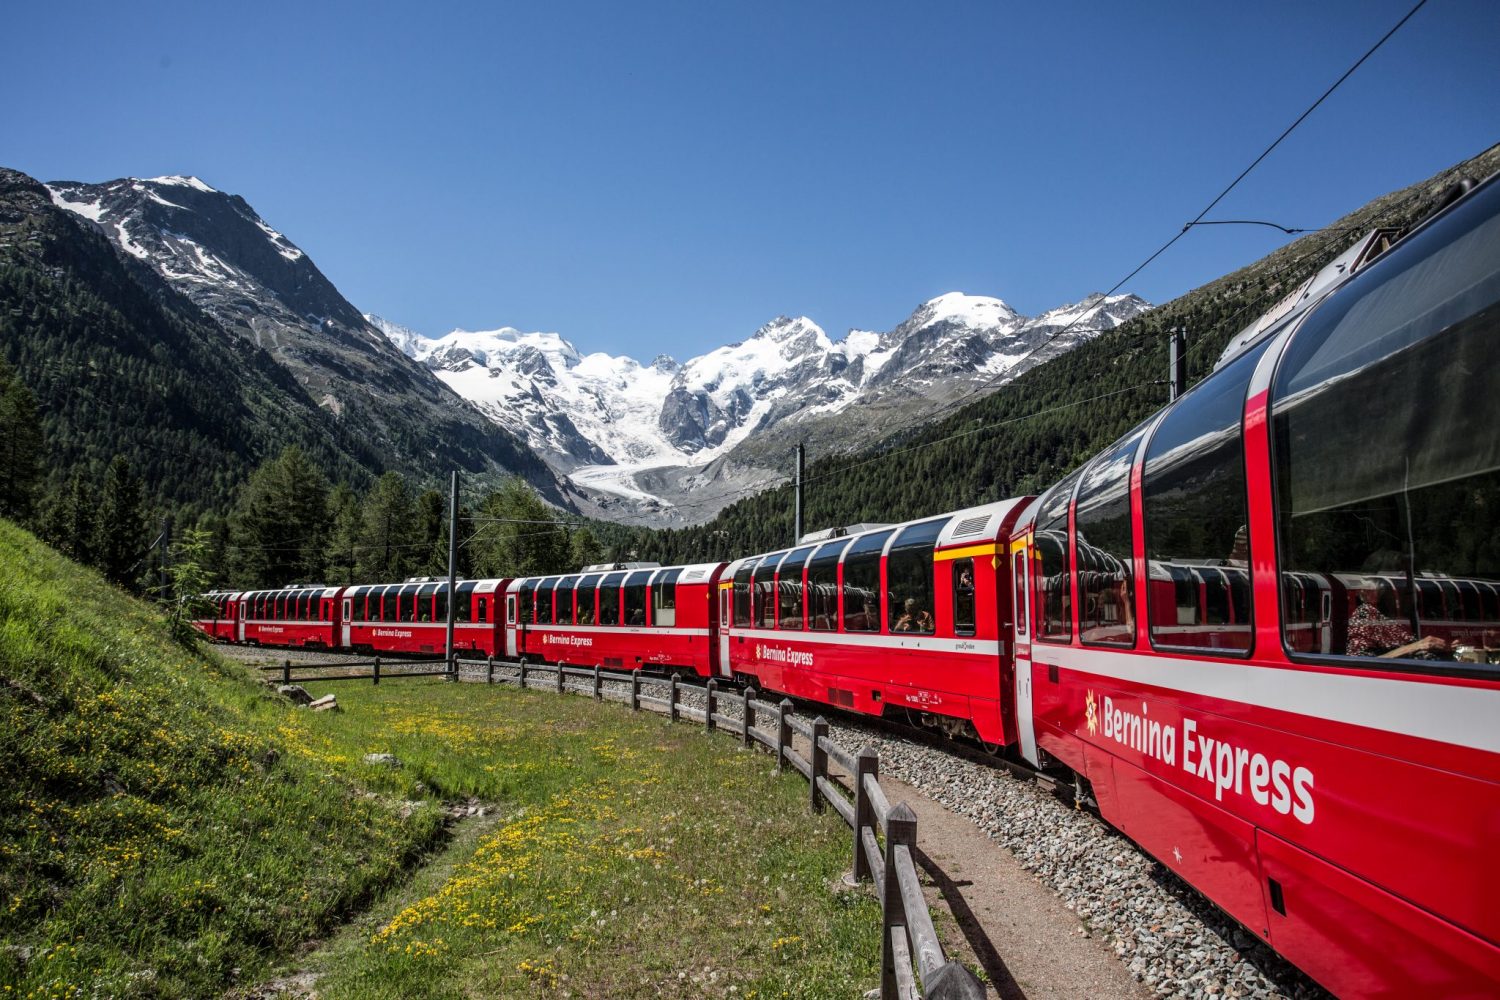 Treinreizen Zwitserland - Bernina Express panoramatrein in de Montebellobocht met de Morteratsch gletsjer op achtergrond